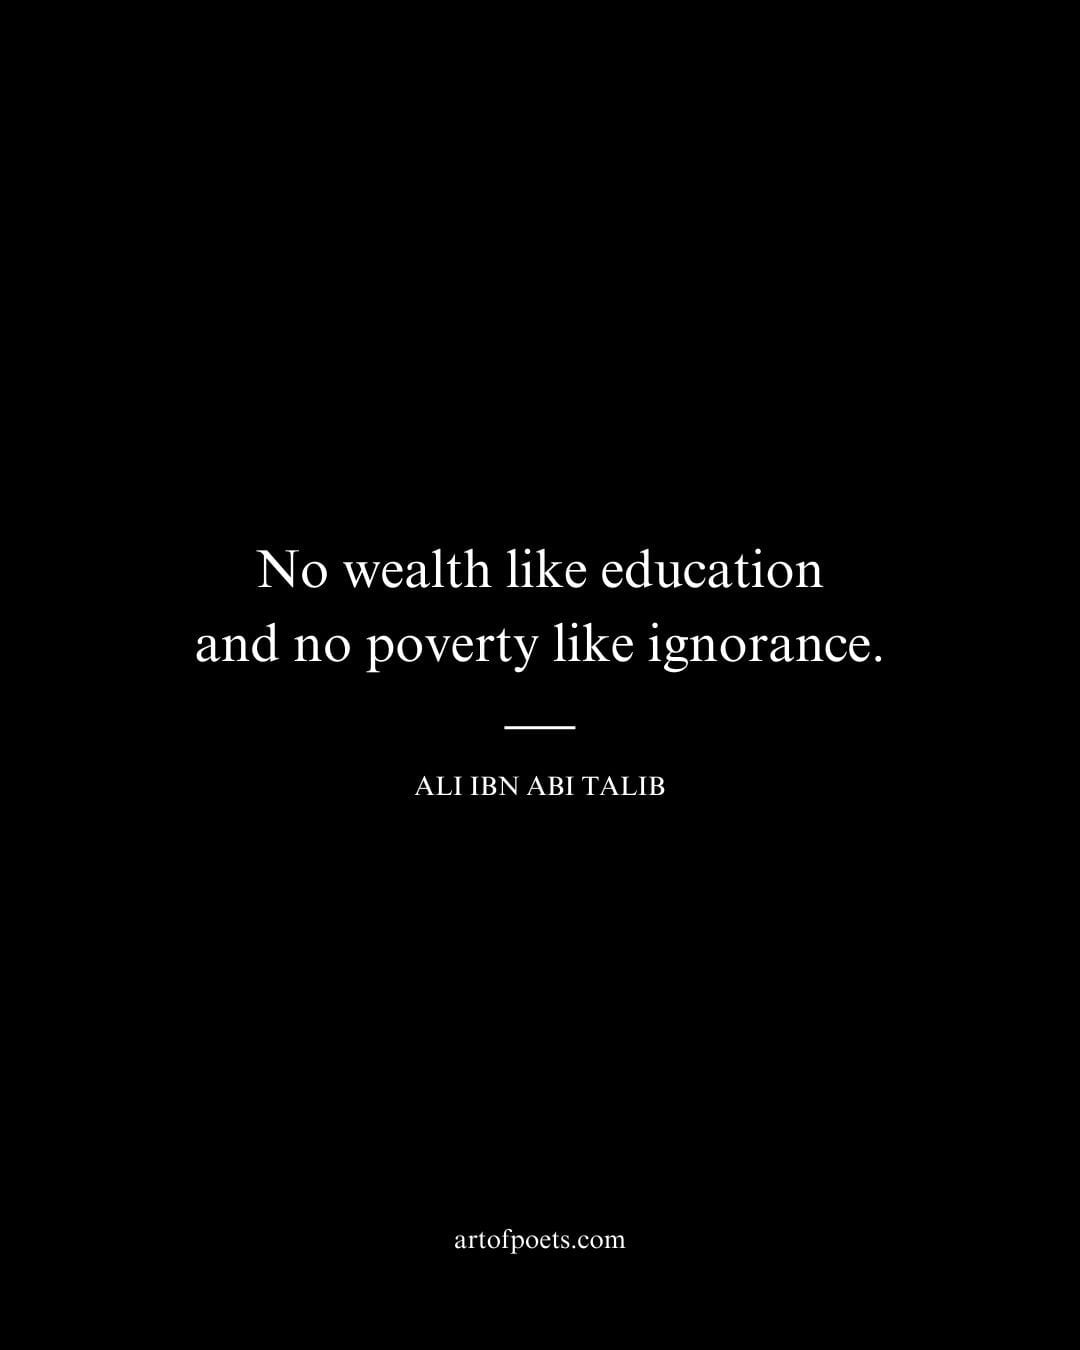 No wealth like education and no poverty like ignorance